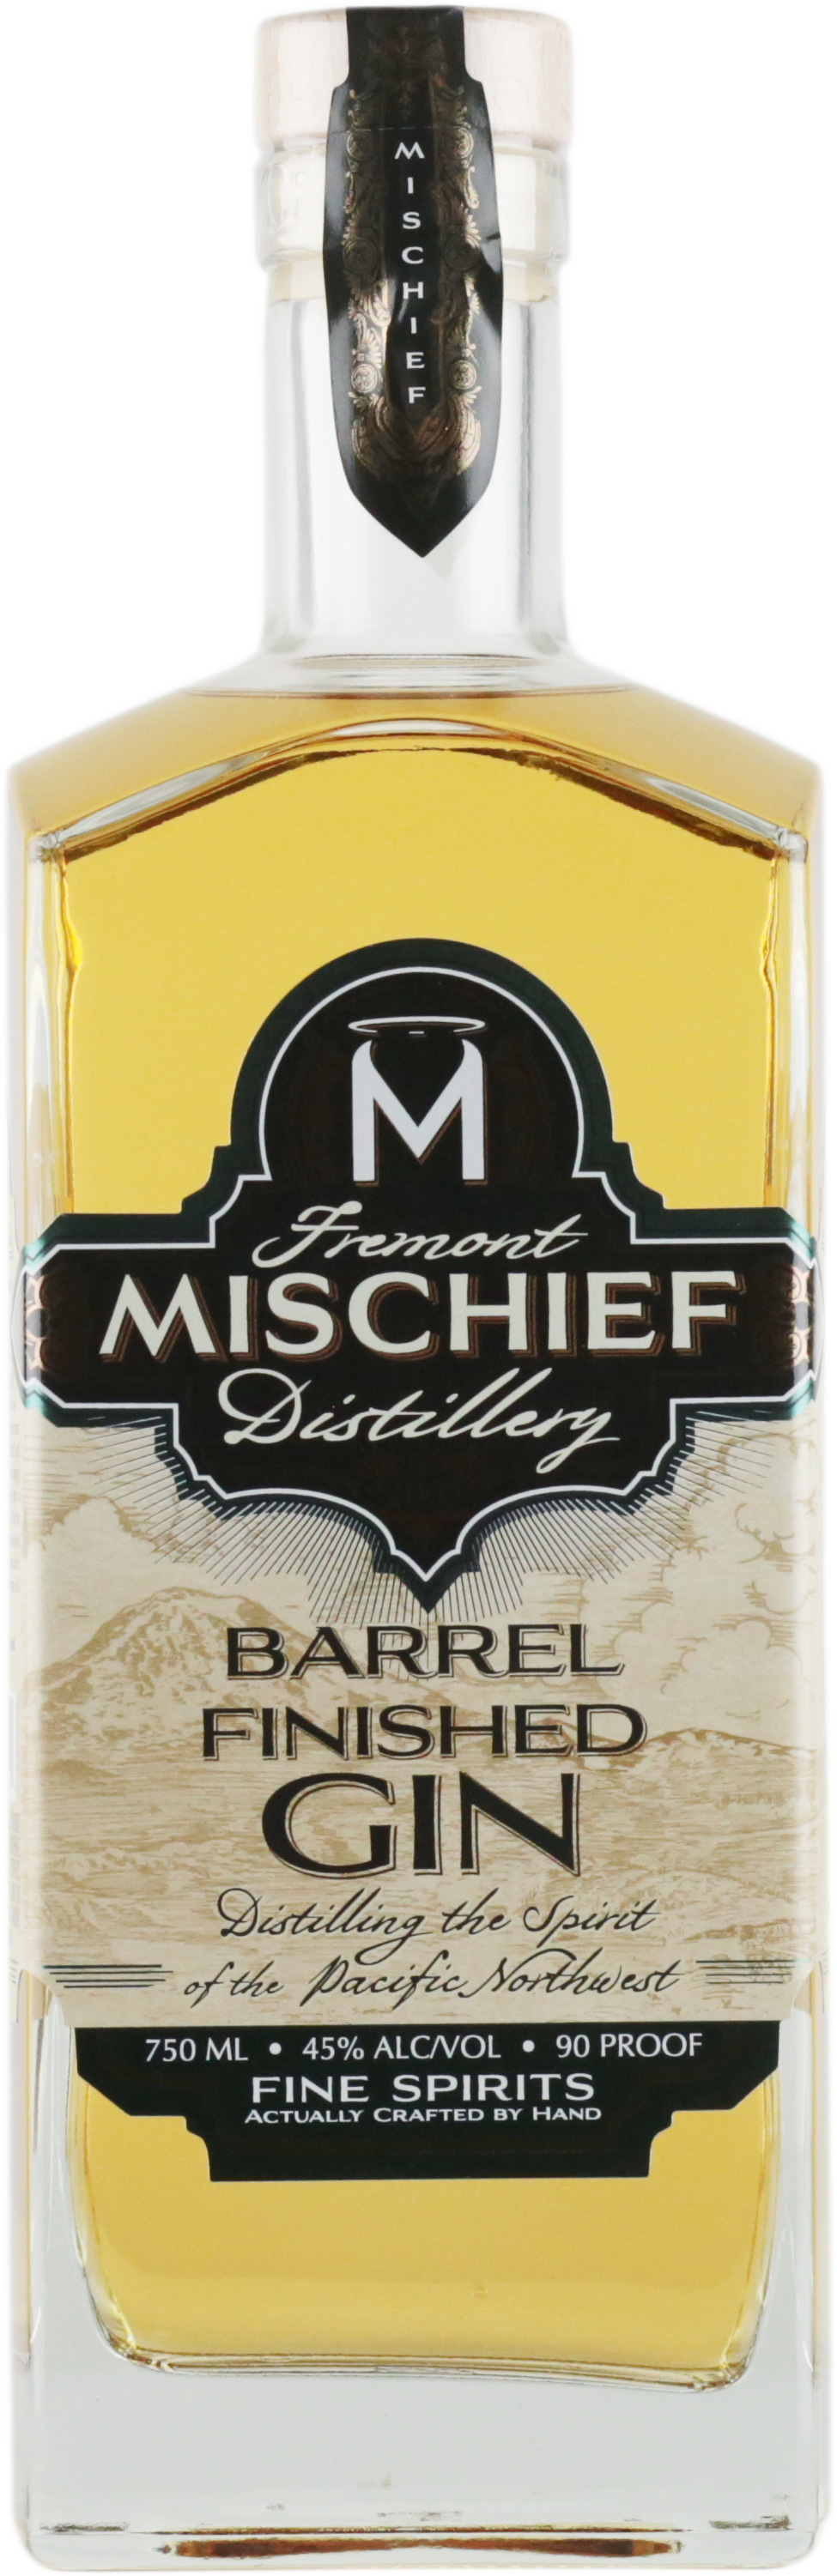 Fremont Mischief Distillery Barrel-Finished Gin